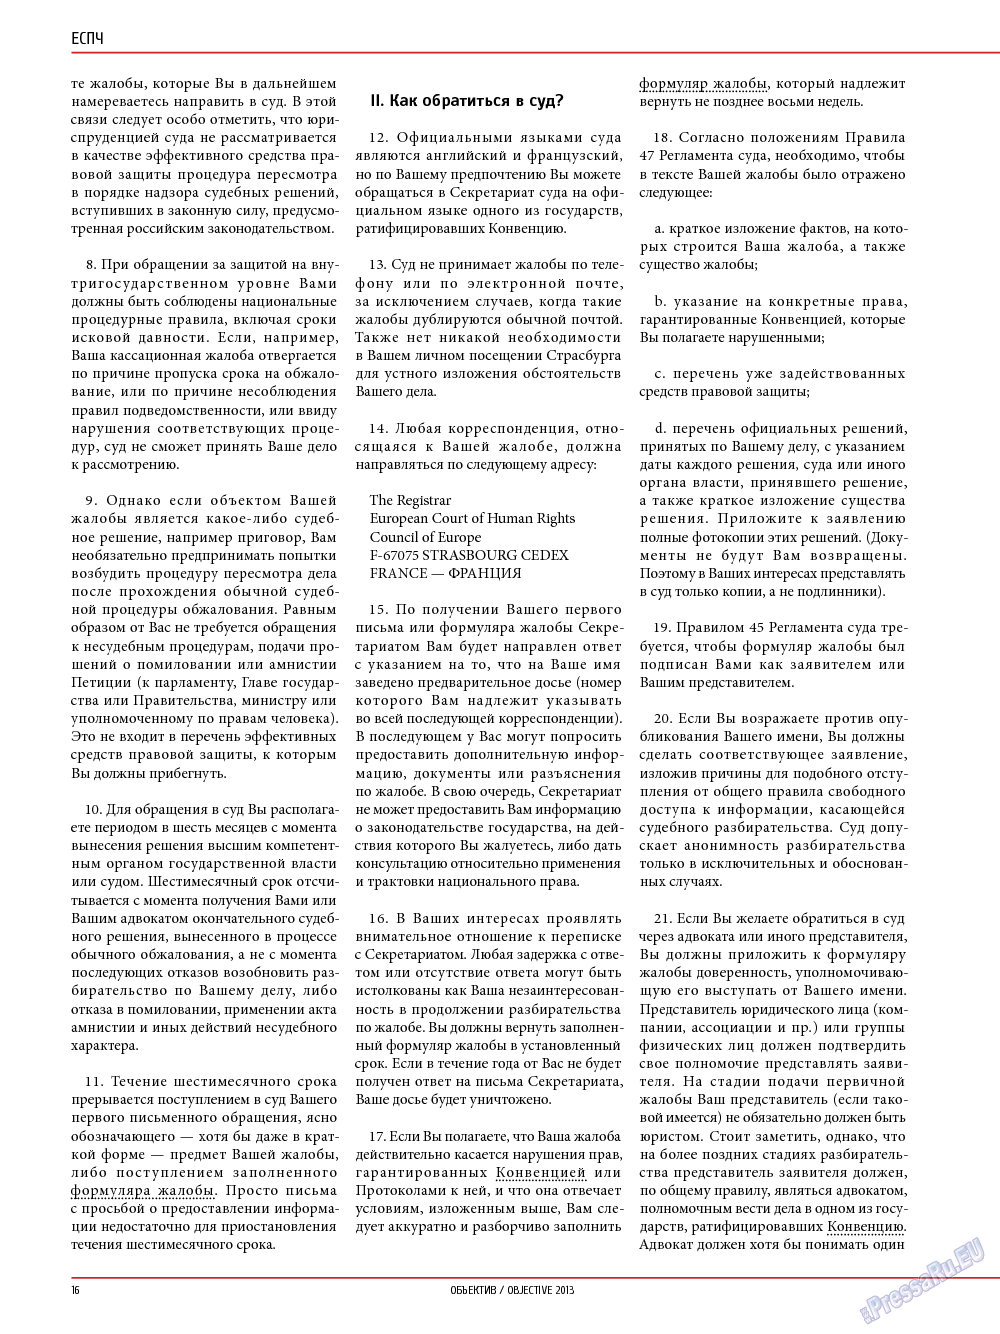 Объектив EU, журнал. 2013 №4 стр.16